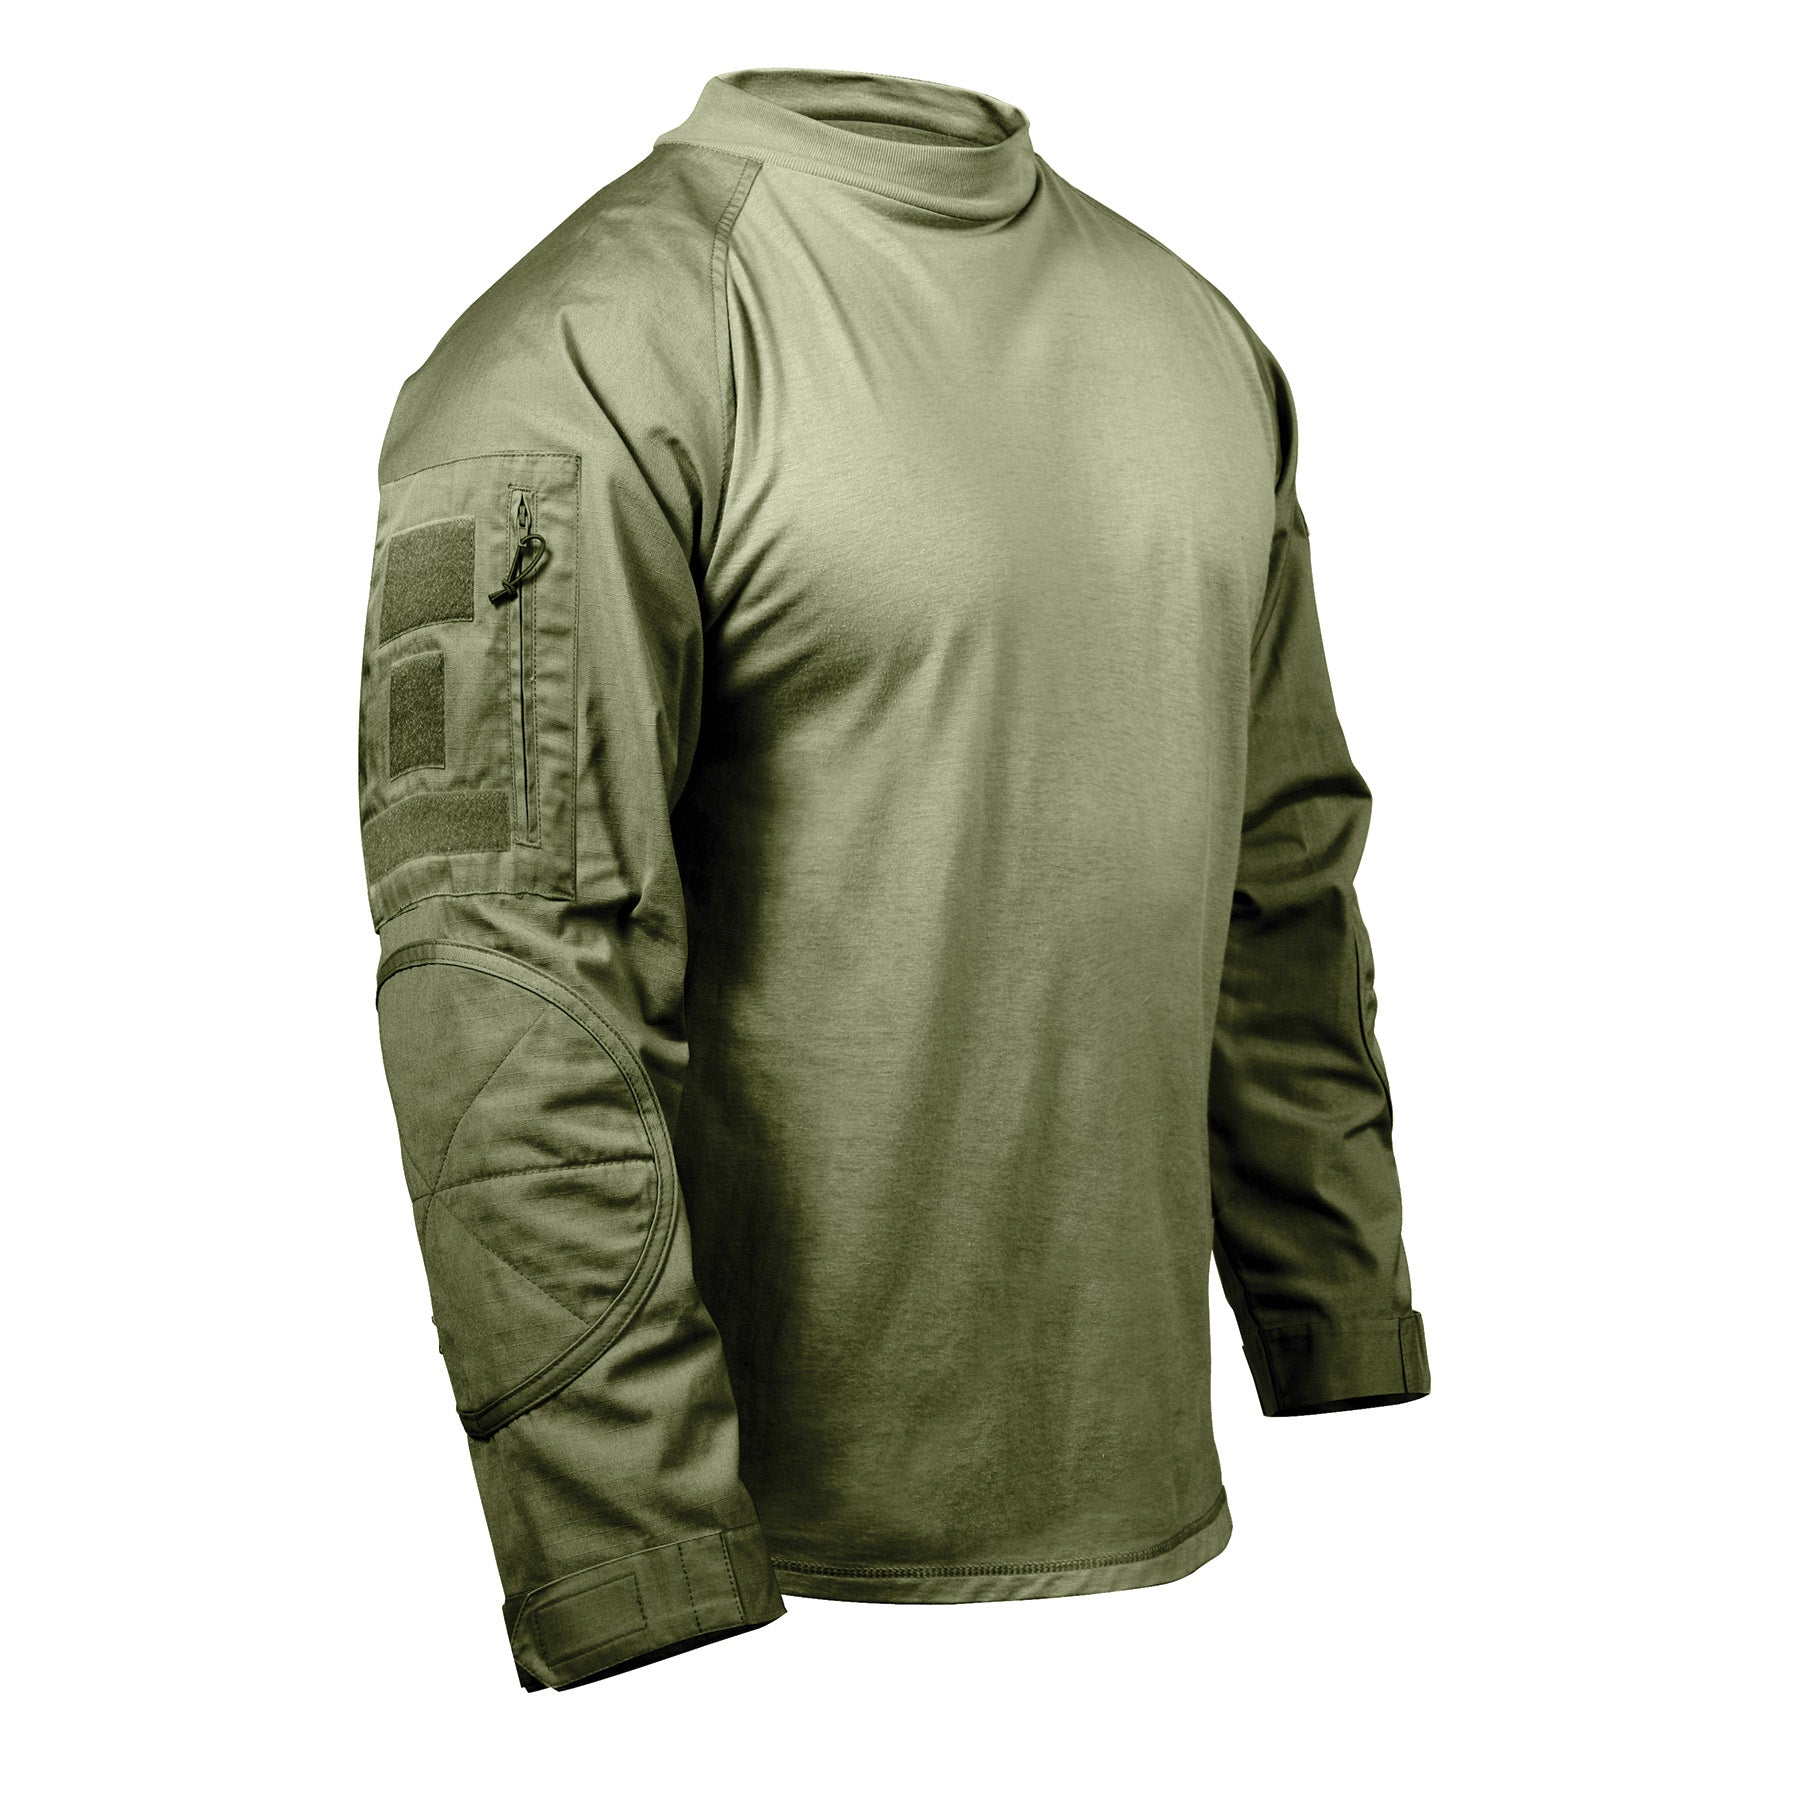 Poly/Cotton/Nylon/Cotton Tactical Combat Shirts